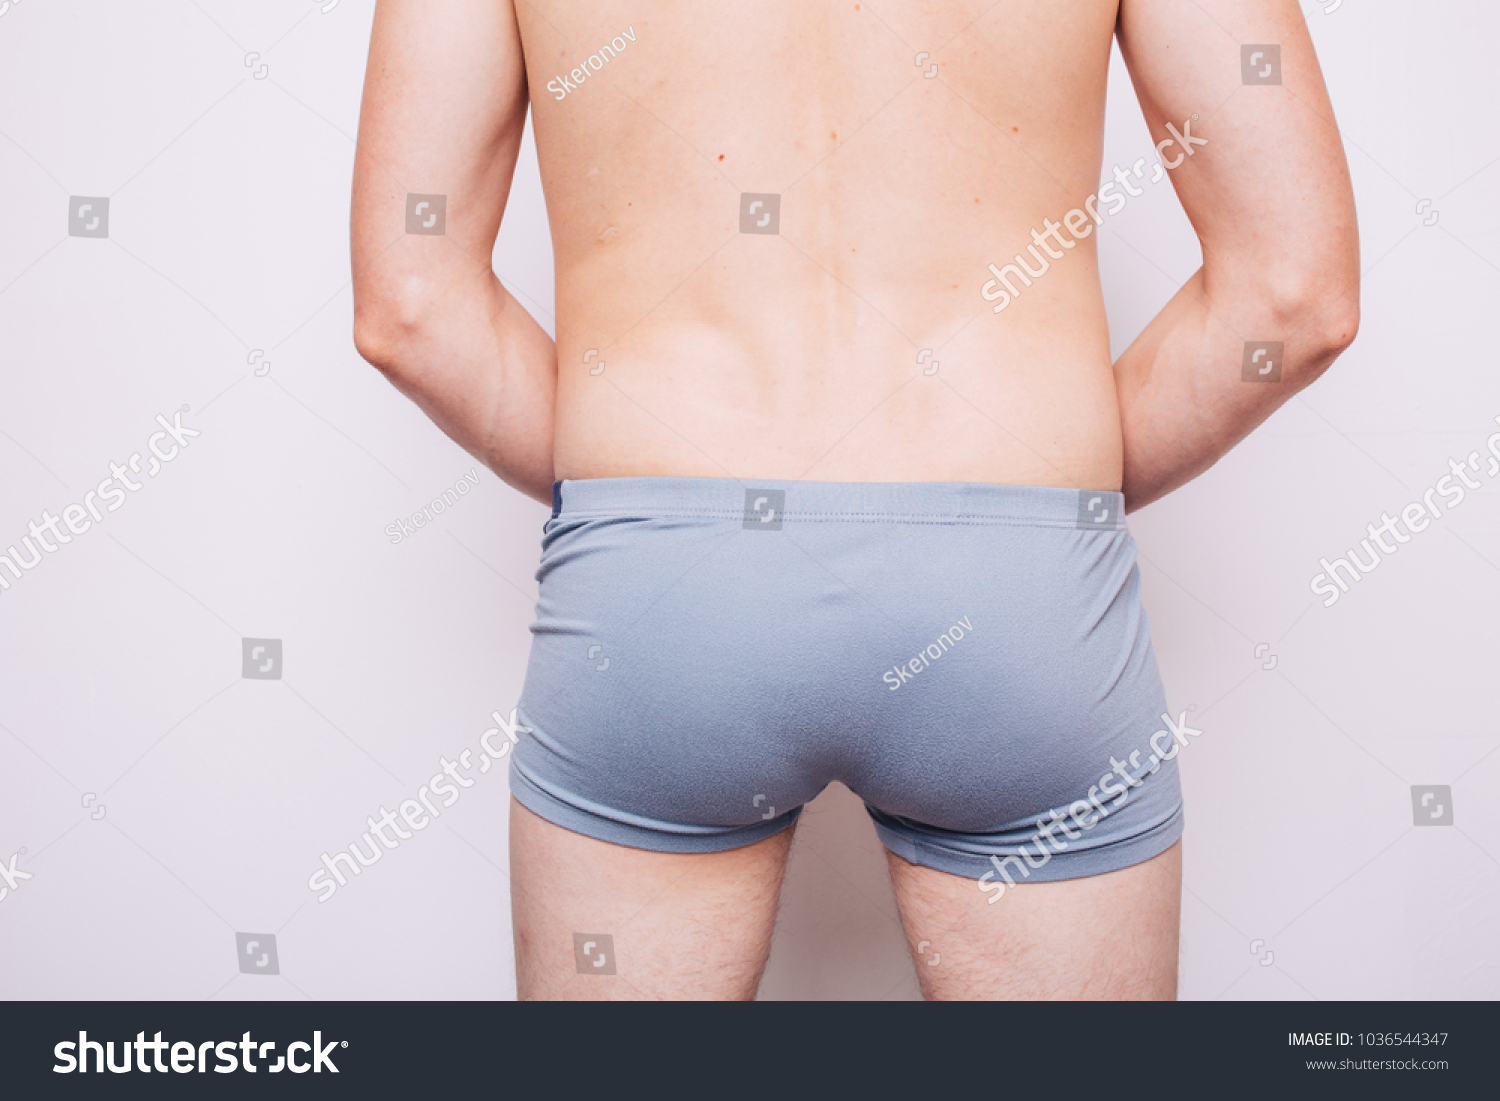 Men Ass Pictures